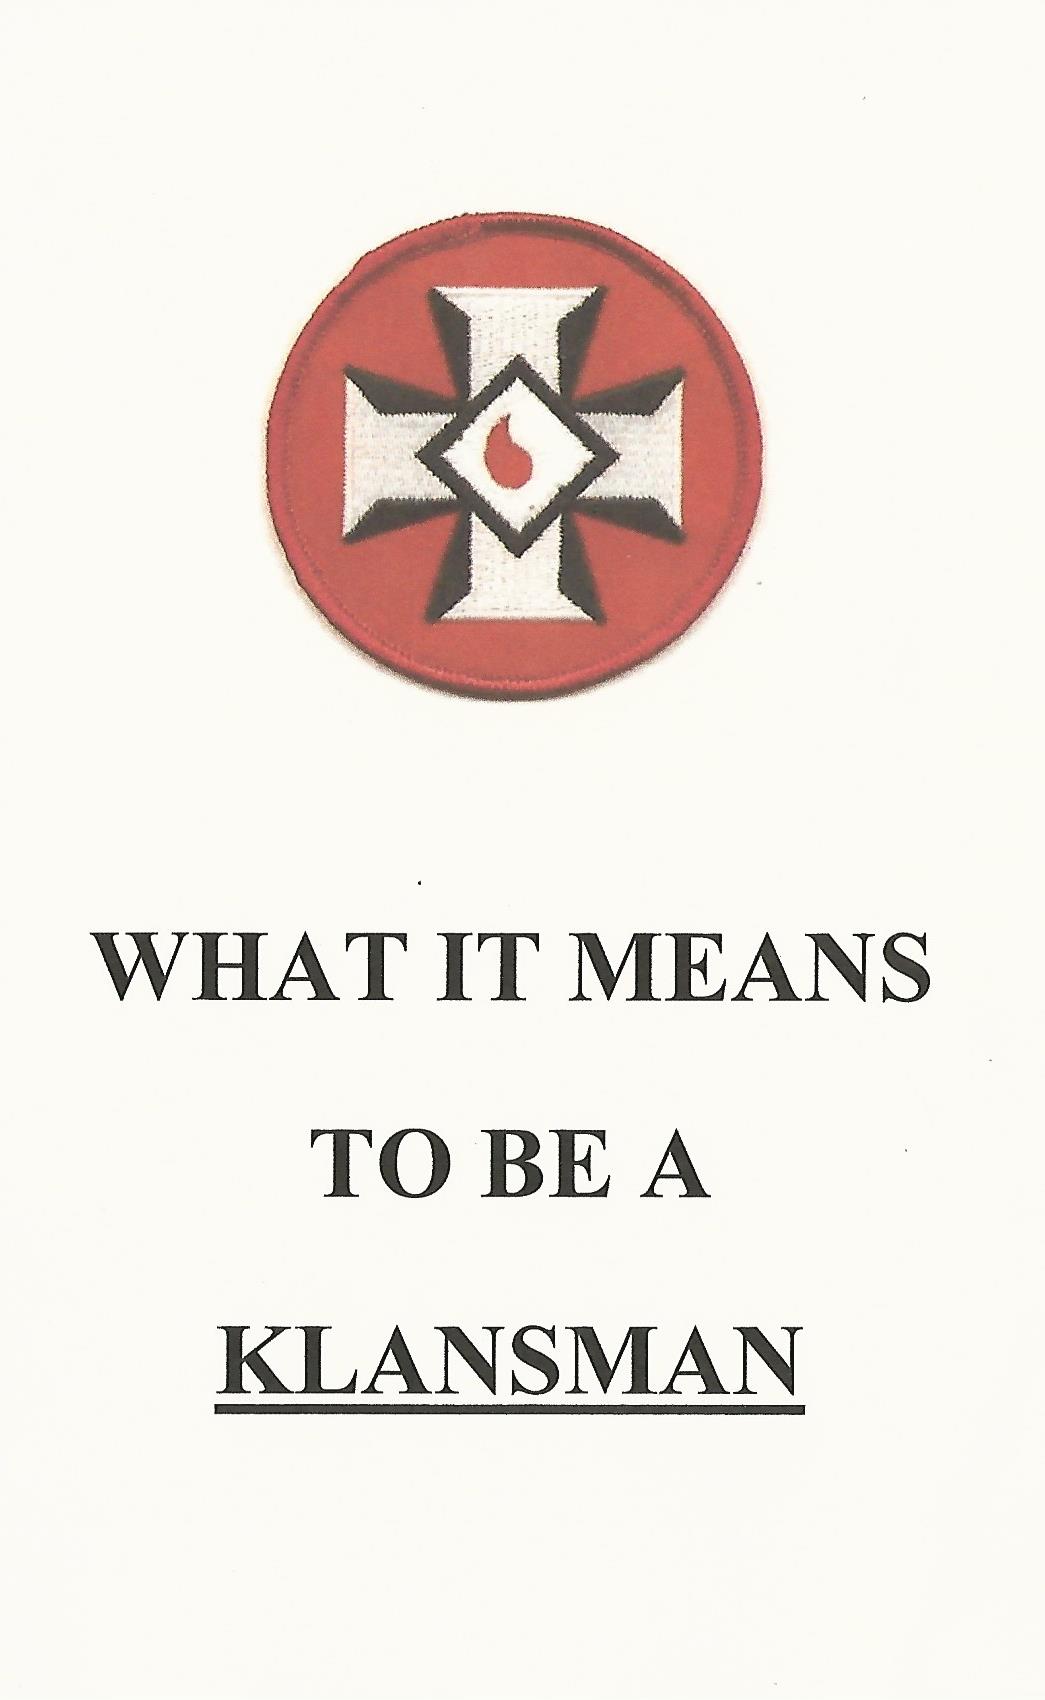 What it means to be a klansman